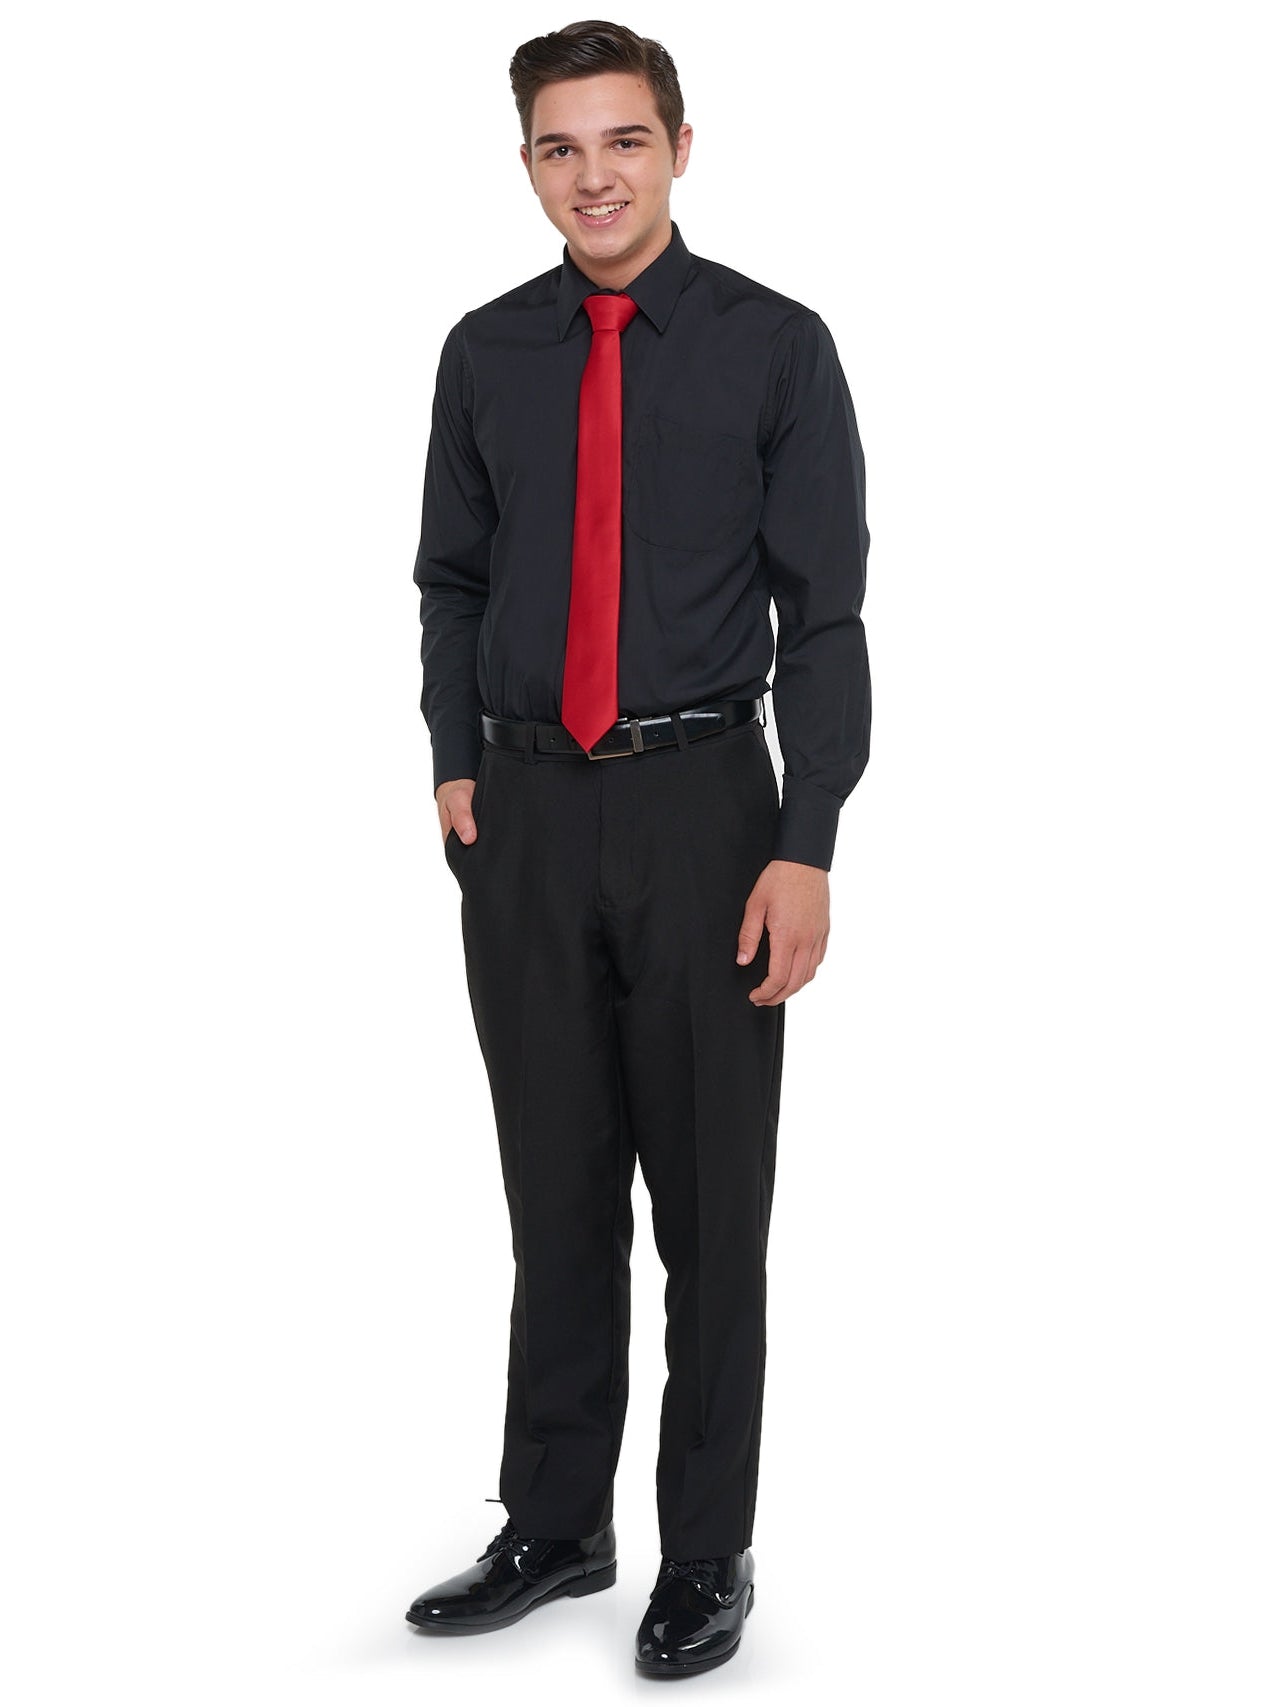 751 - Black Laydown Collar Non-Pleated Dress Shirt